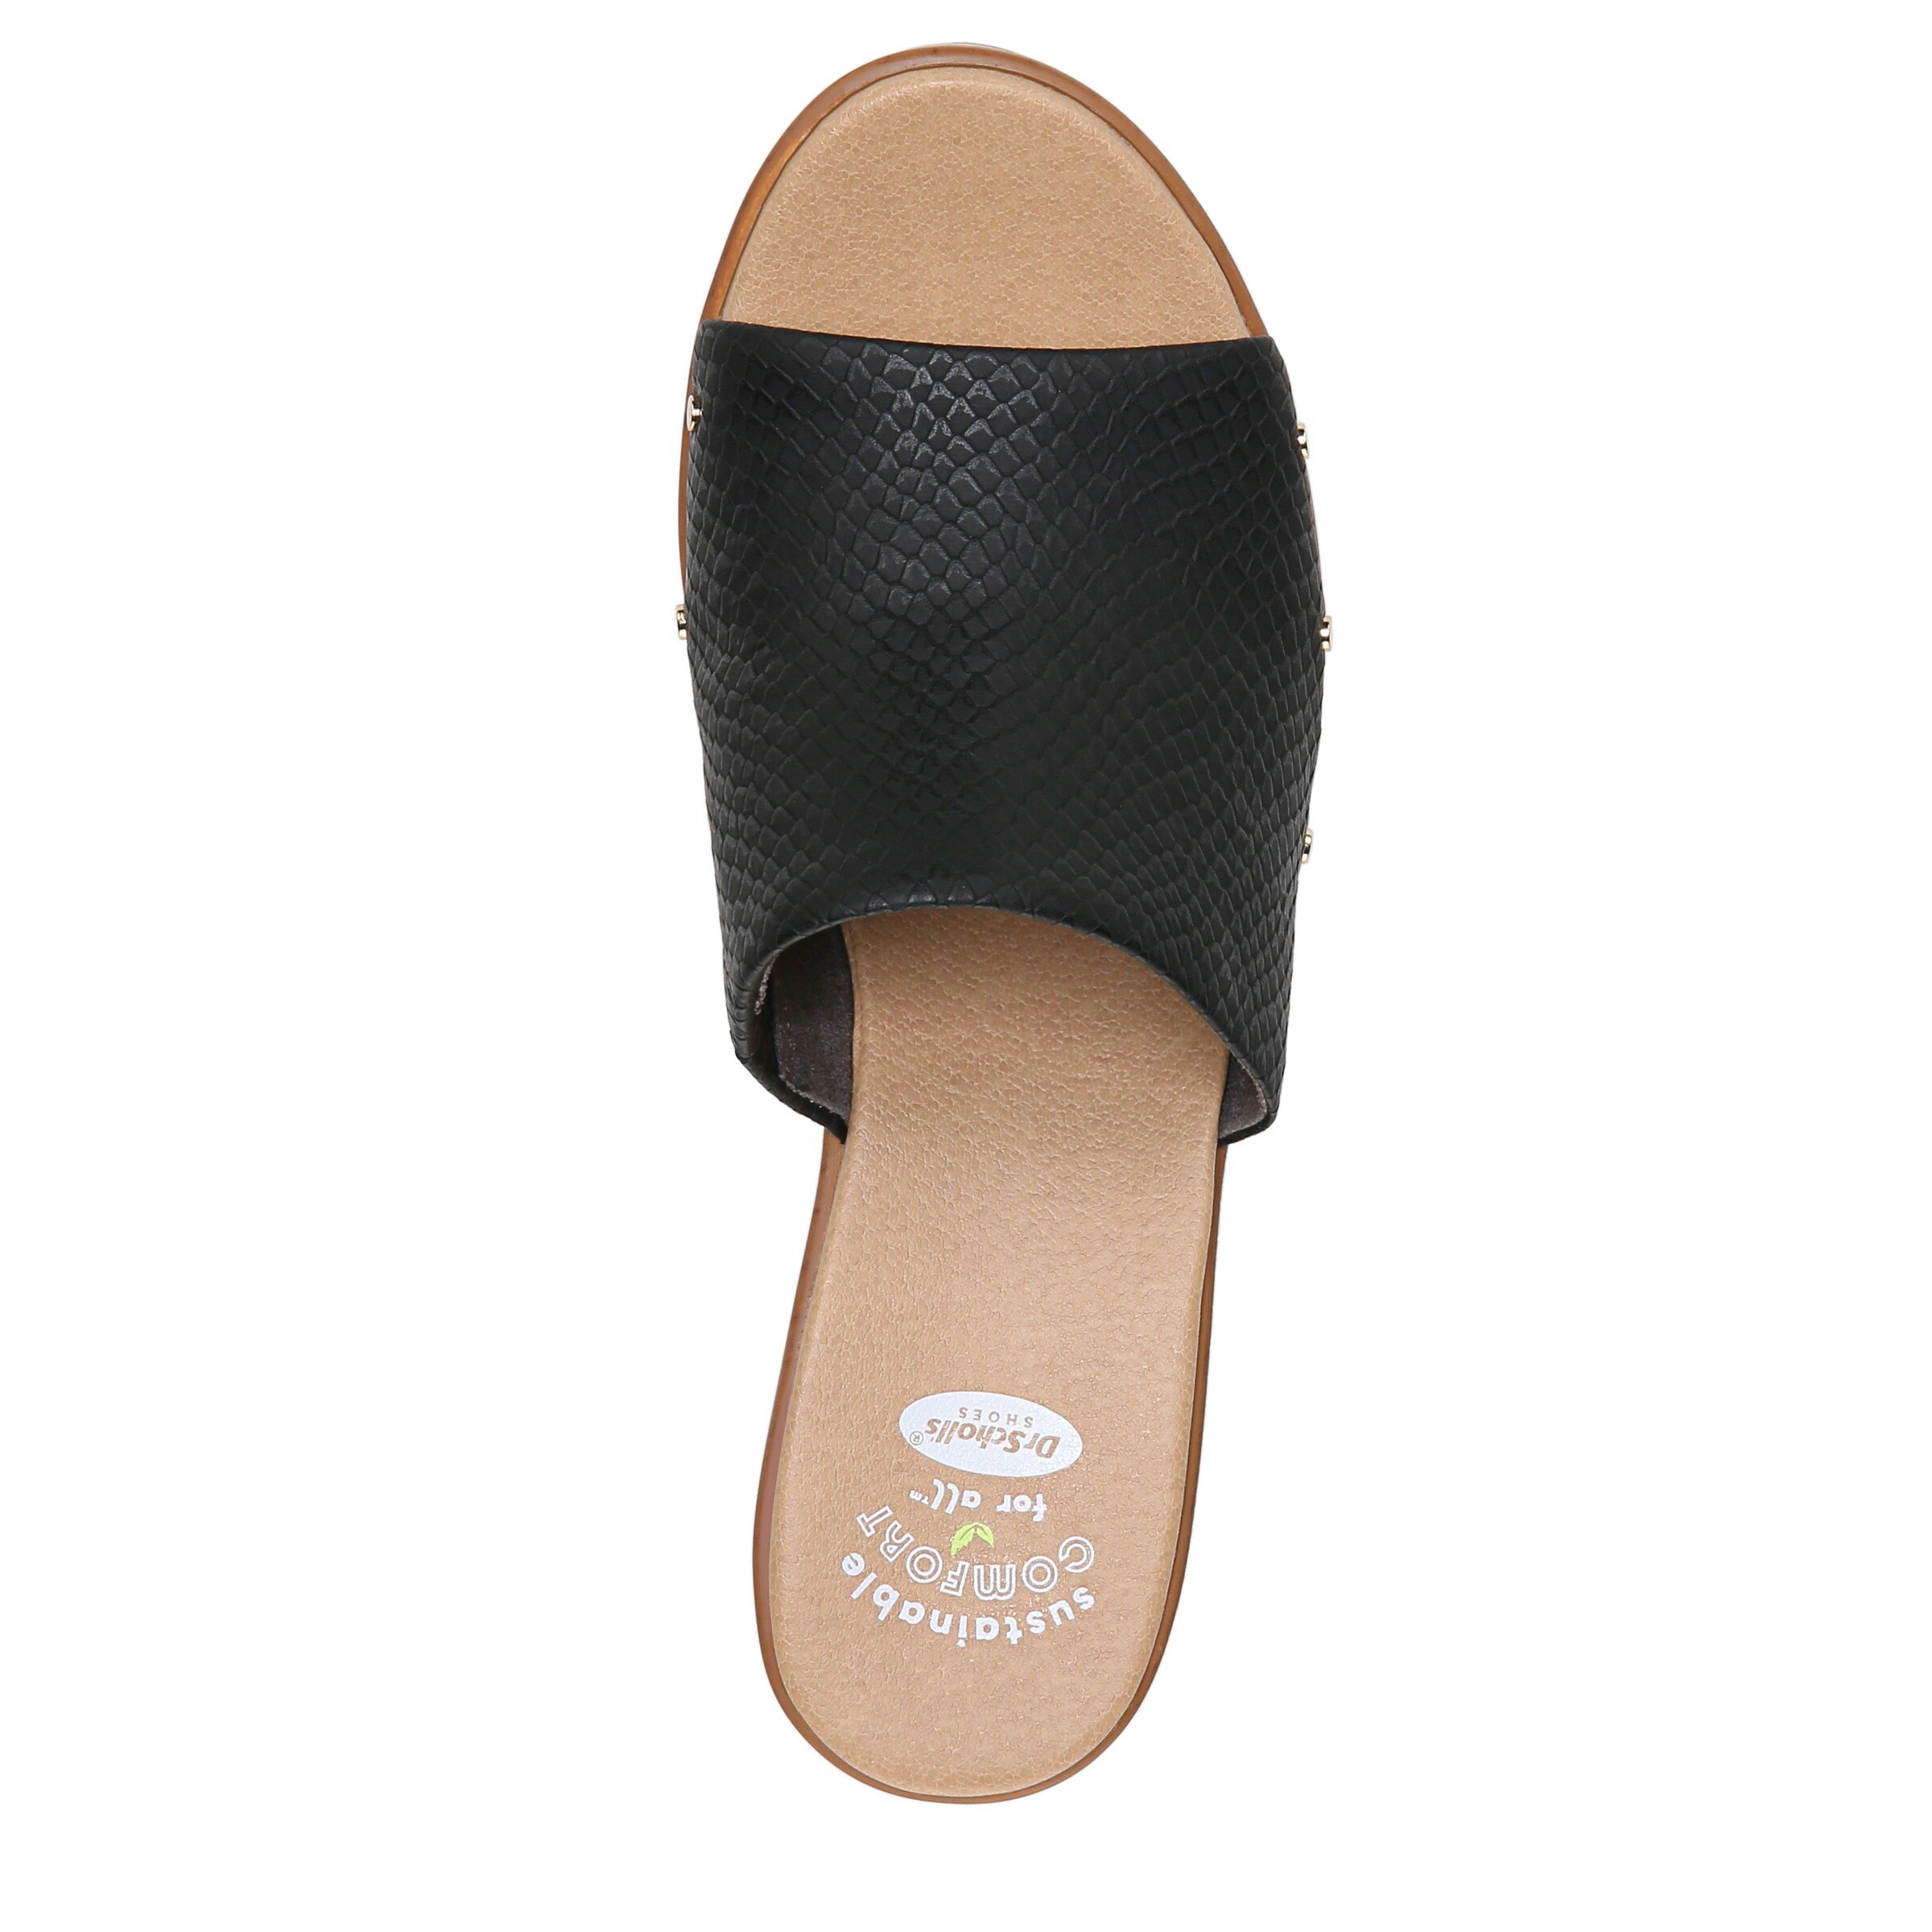 Dr. Scholl's Women's White Slipper Flip Flop - 8 UK : Amazon.in: Fashion